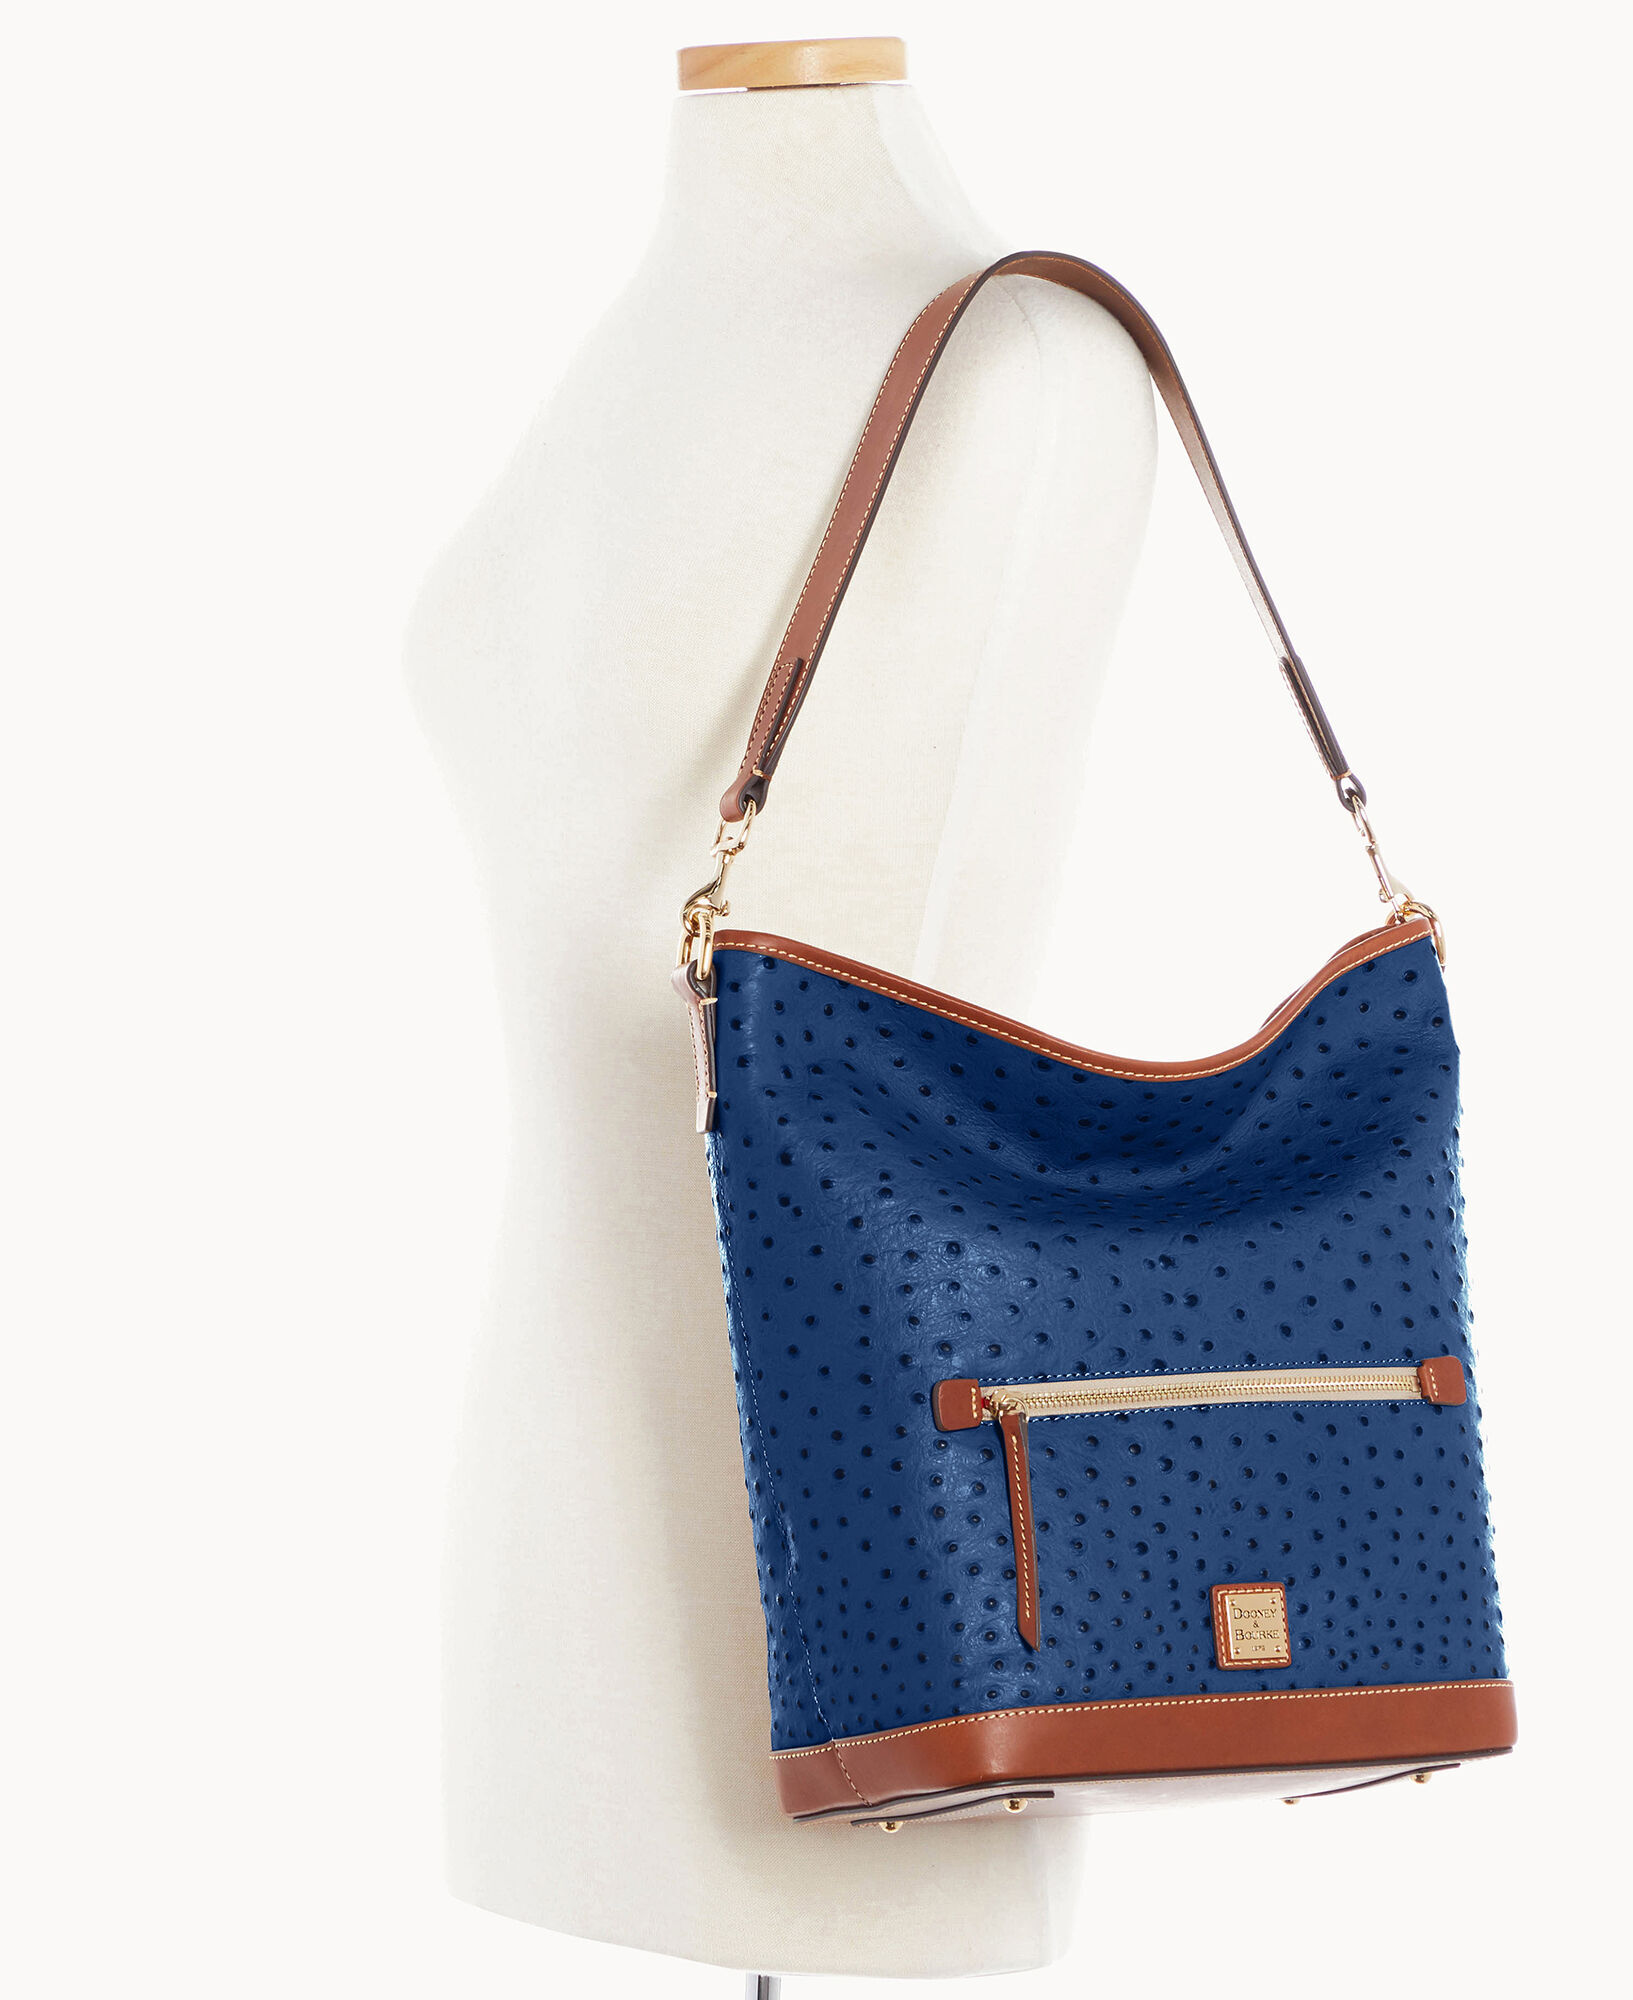 Dooney & Bourke, Bags, Blue Ostrich Leather Medium Dooney Bourke Bag